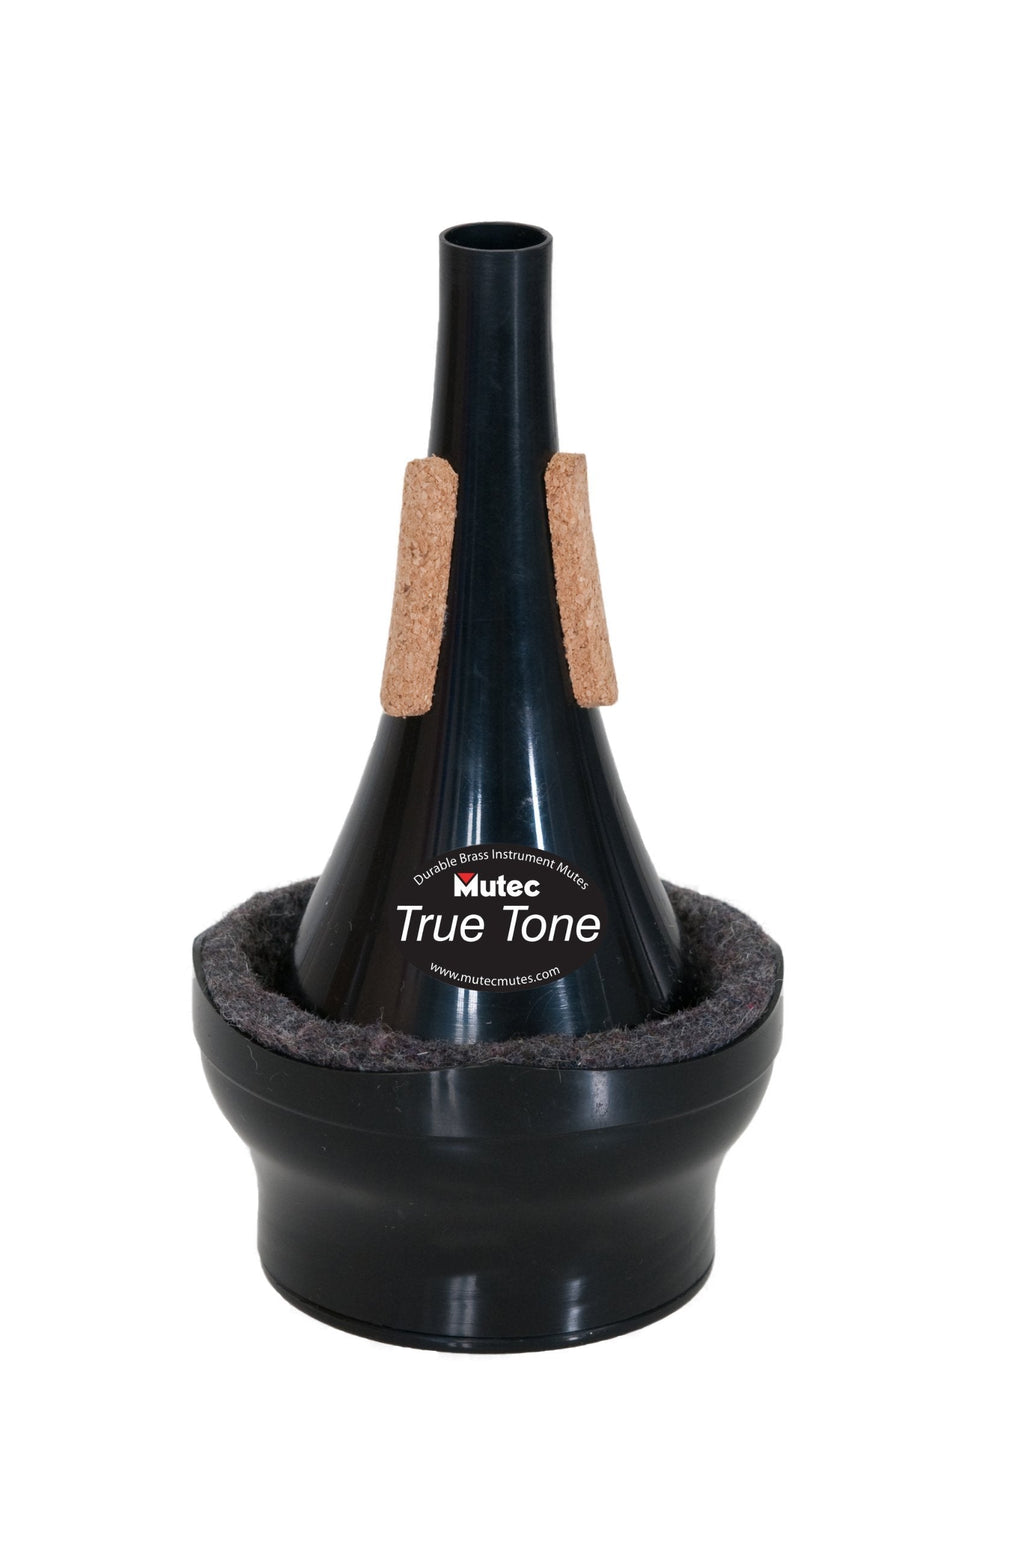 Mutec MHT149 Truetone by Cup Mute for Trumpet - Black Plastic